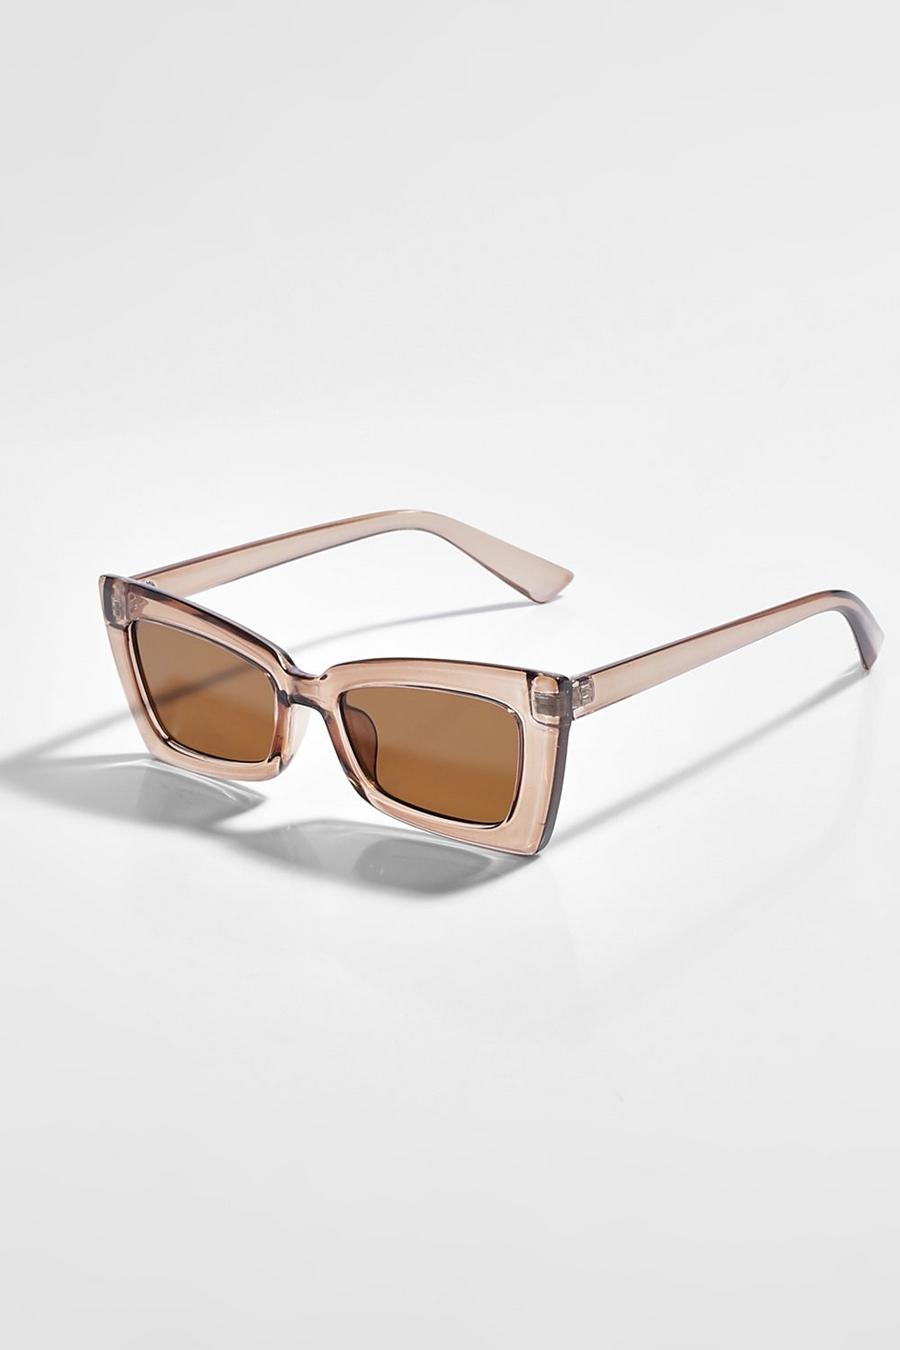 Chocolate marron Square Cat Eye Sunglasses